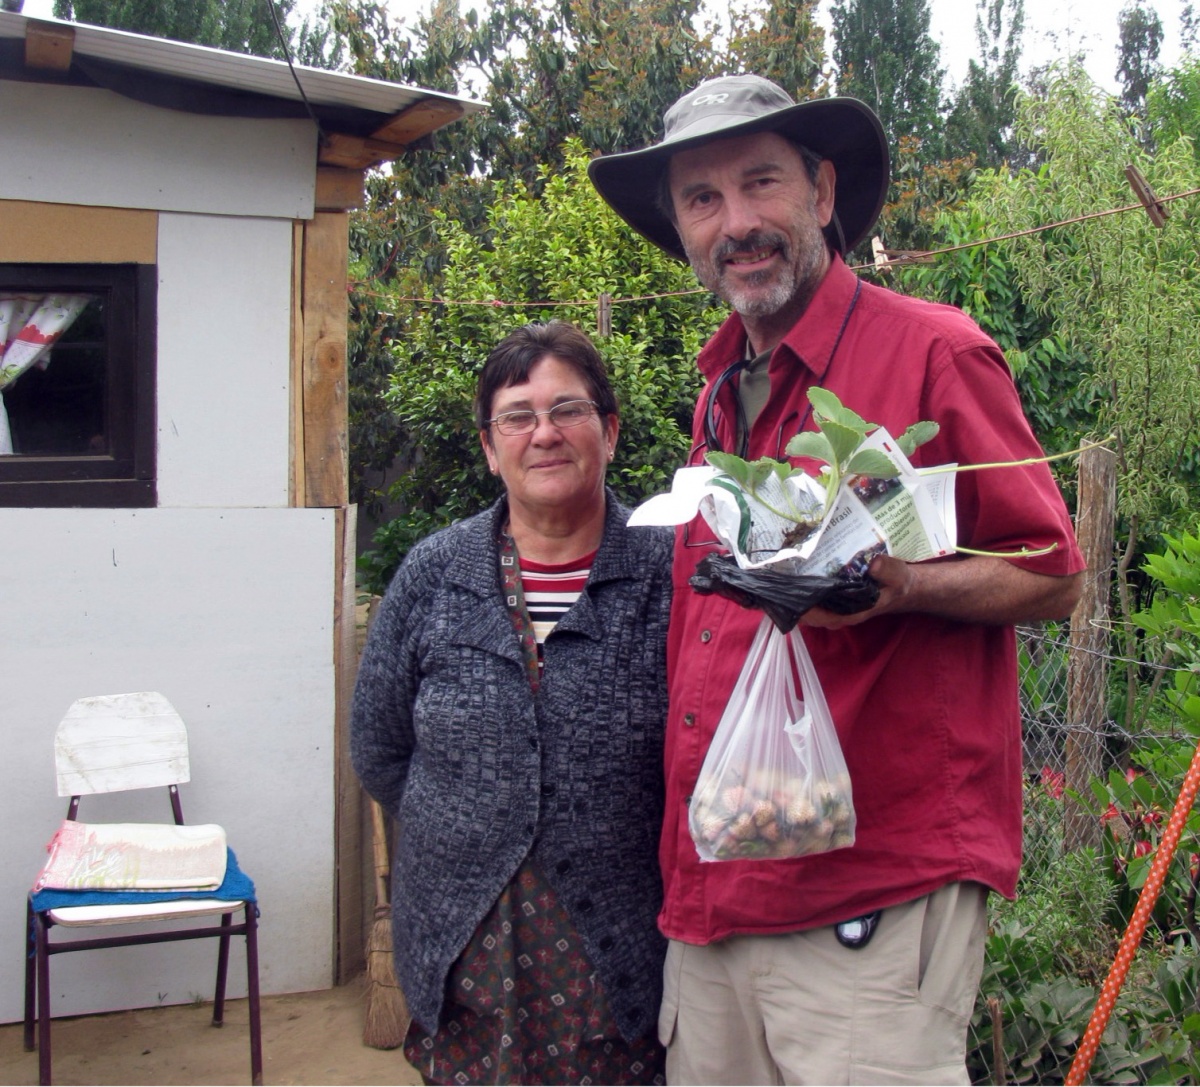 Tom Davis (man) with a strawberry farmer in Chile